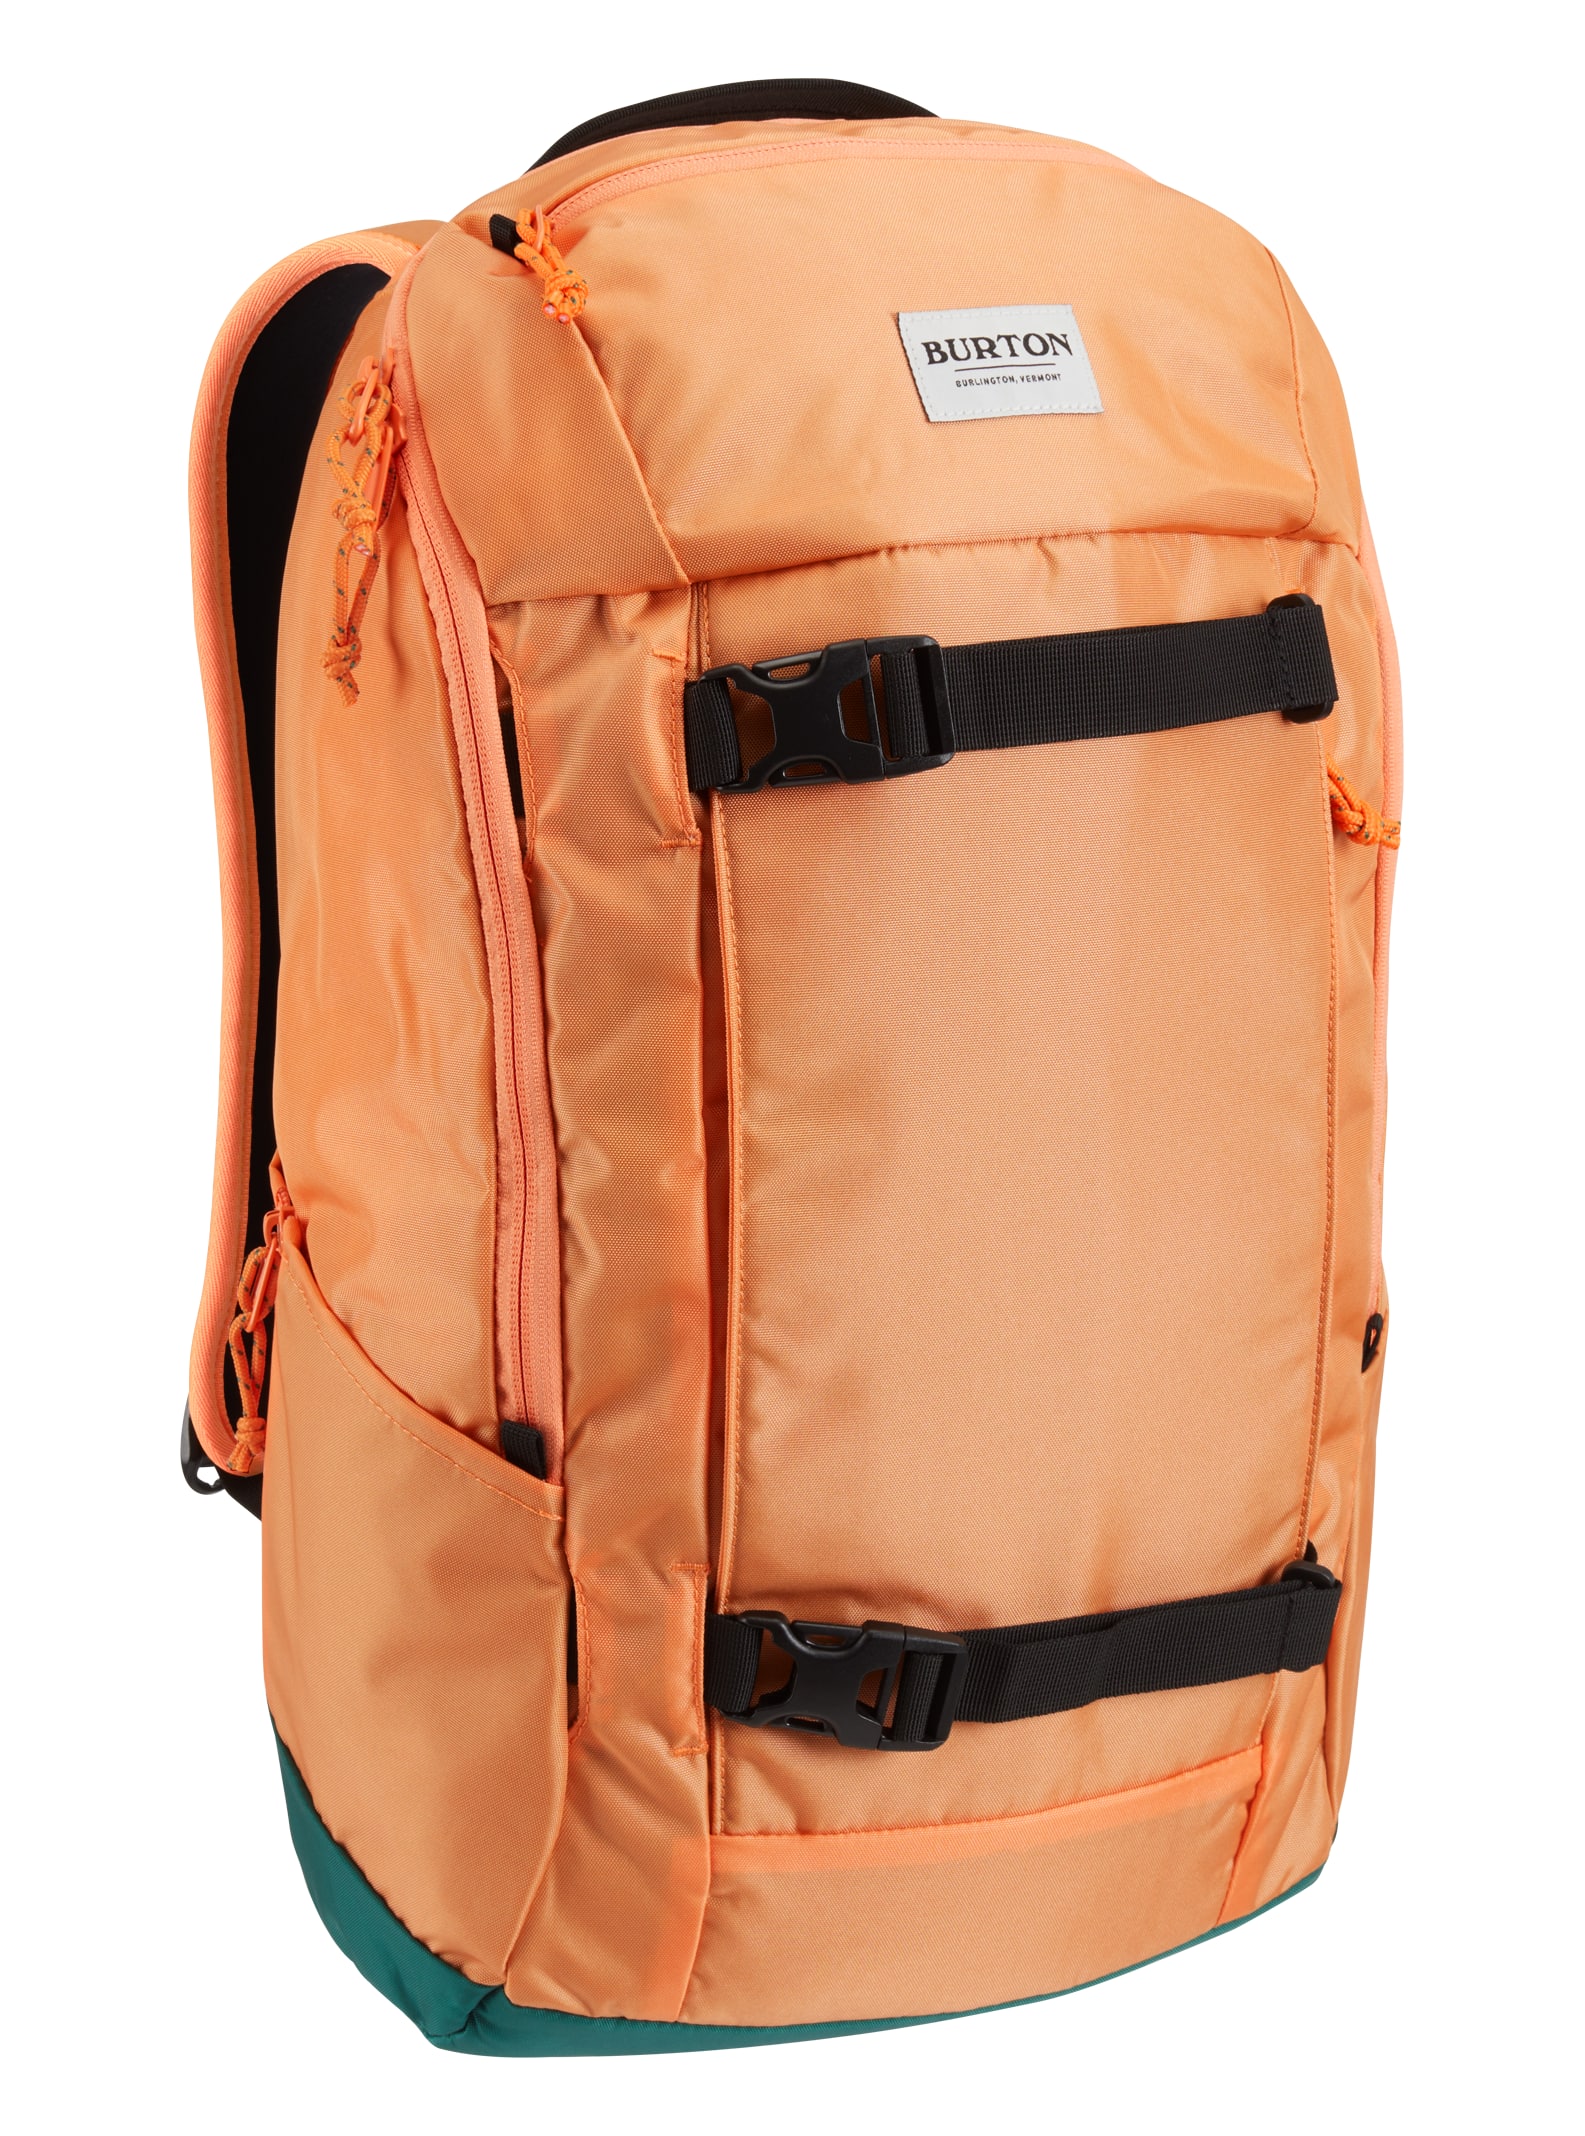 Burton Kilo 2.0 27L Backpack | Burton.com Spring 2021 JP